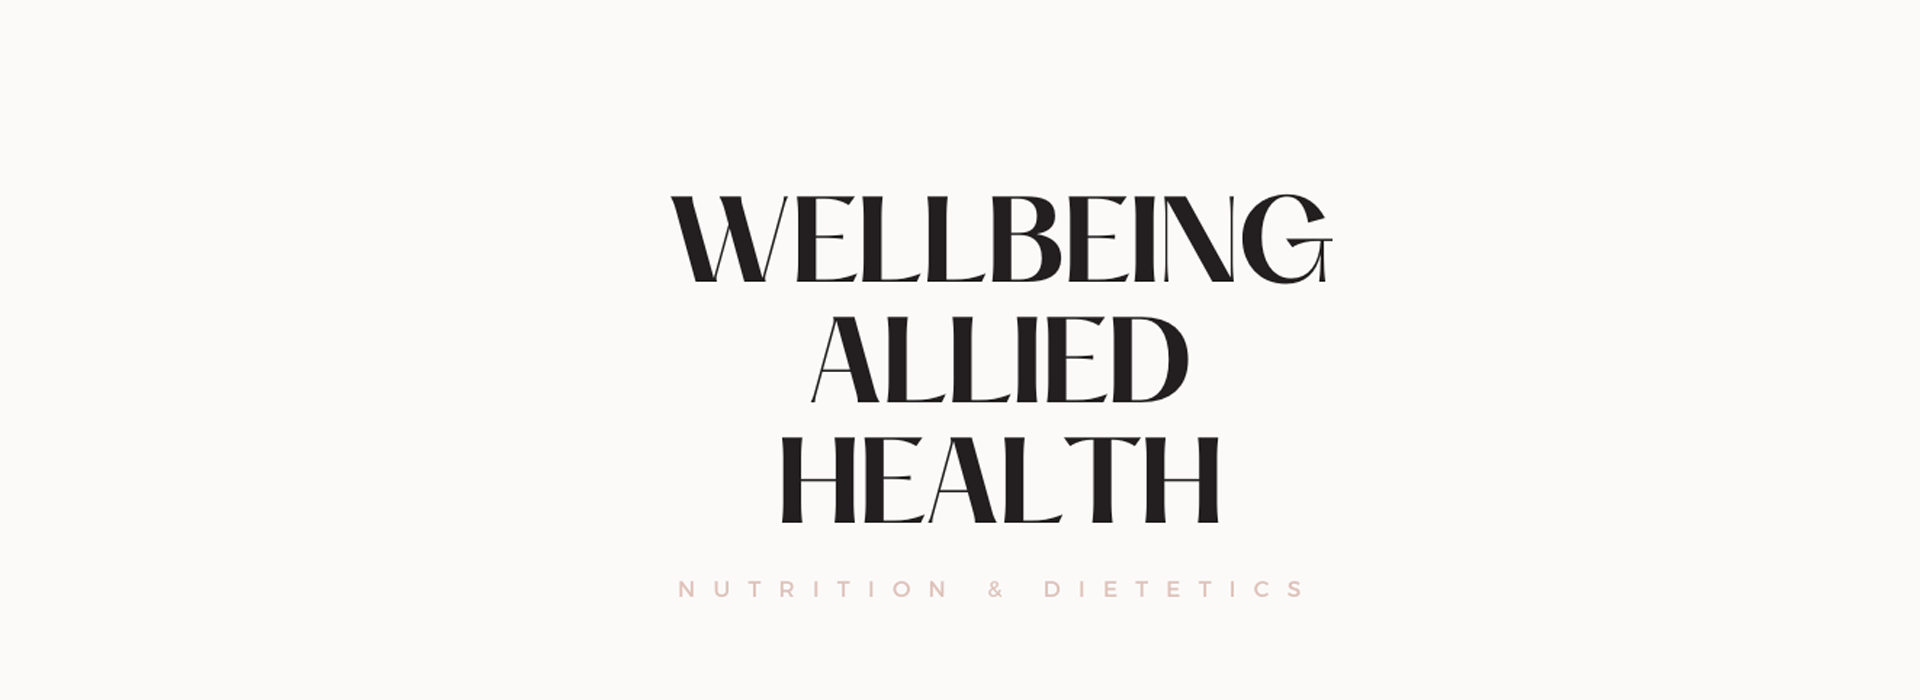 Wellbeing Allied Health